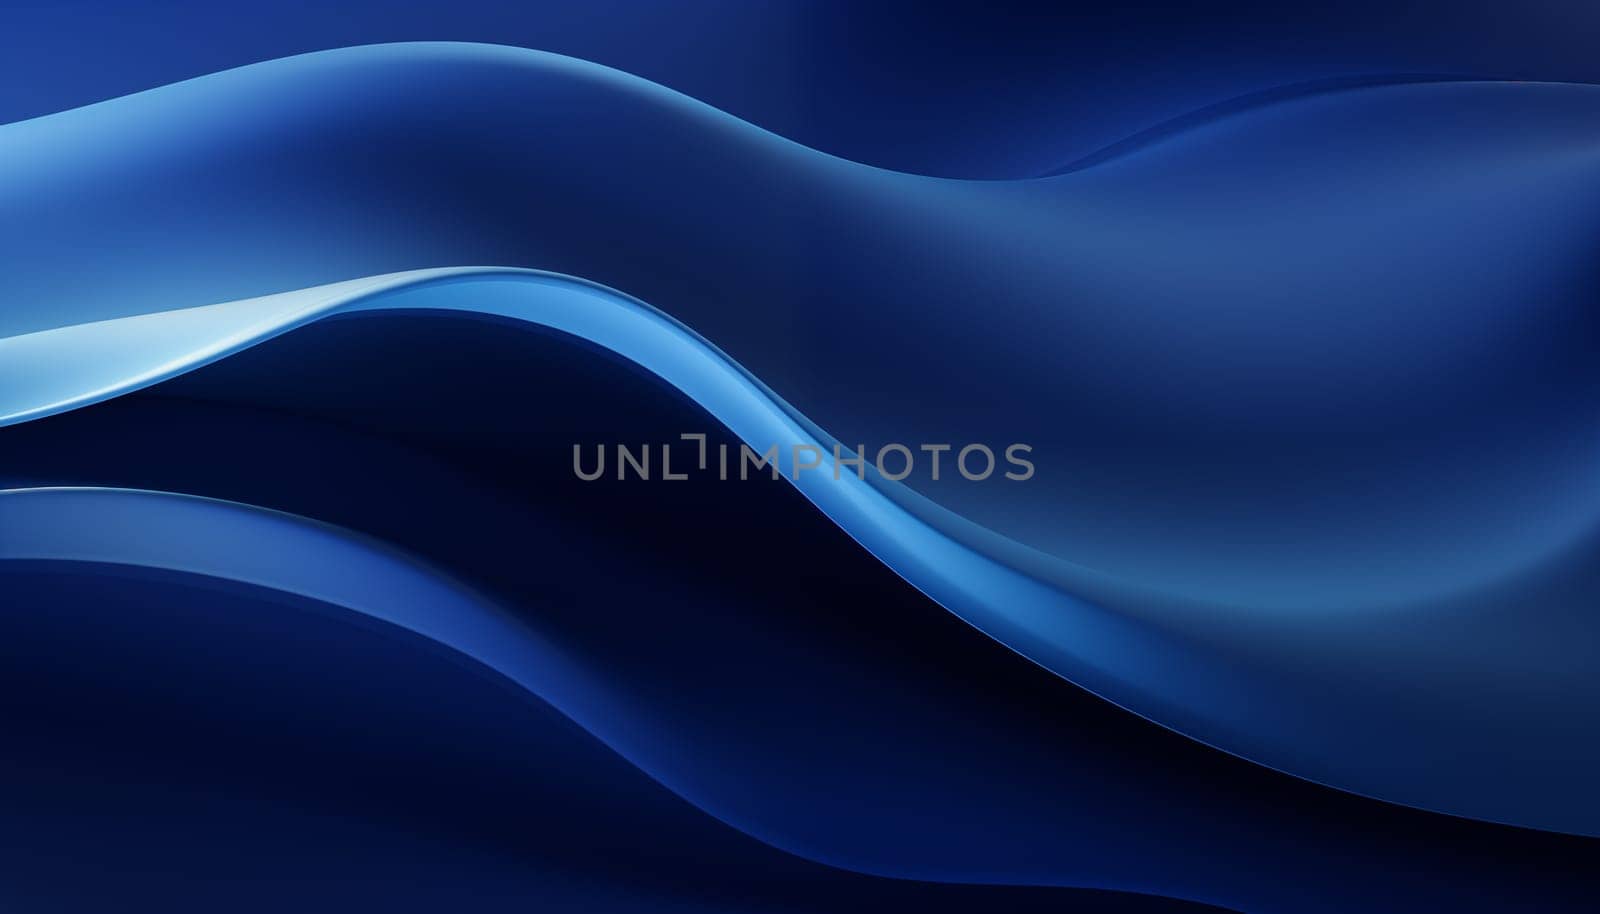 Navy blue waves background. High quality illustration